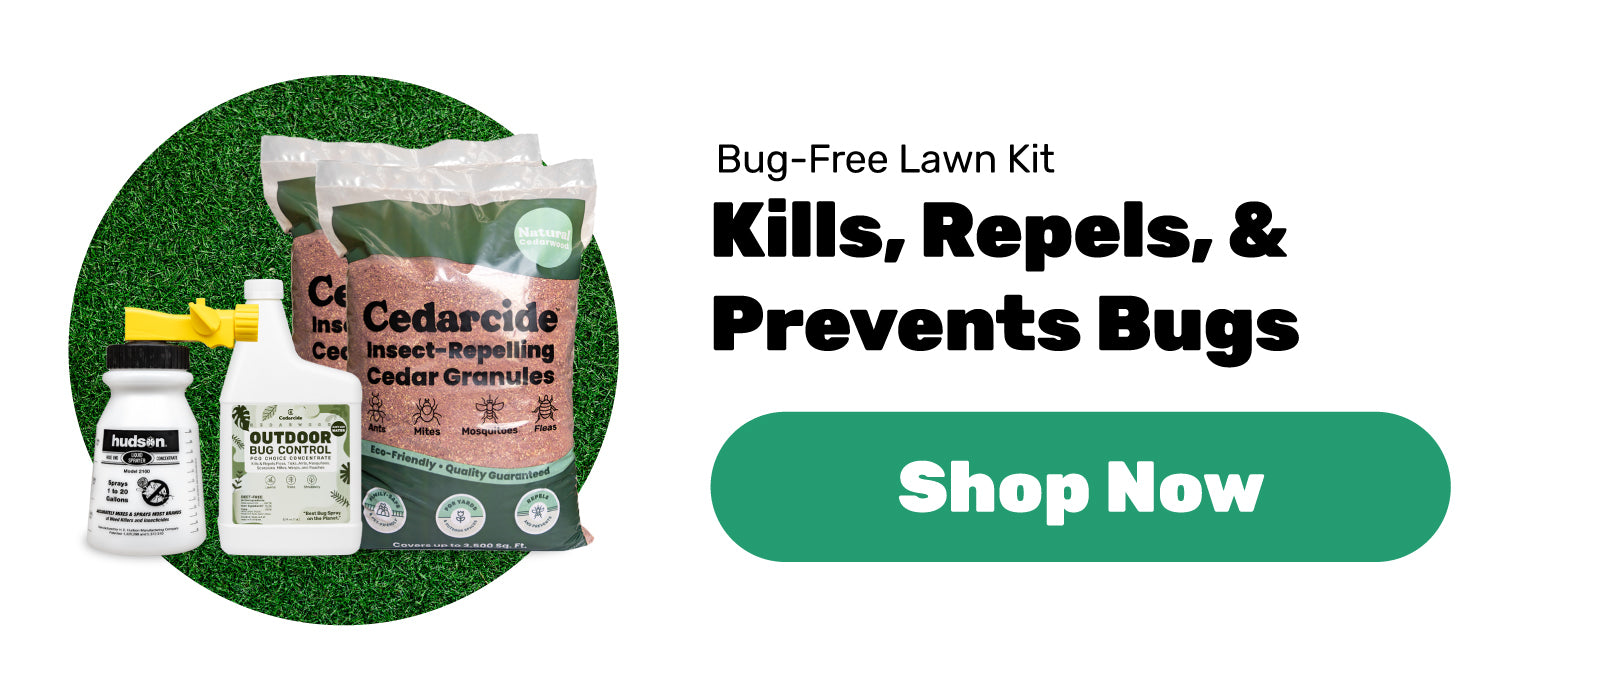 The Cedarcide Bug-Free Lawn Kit